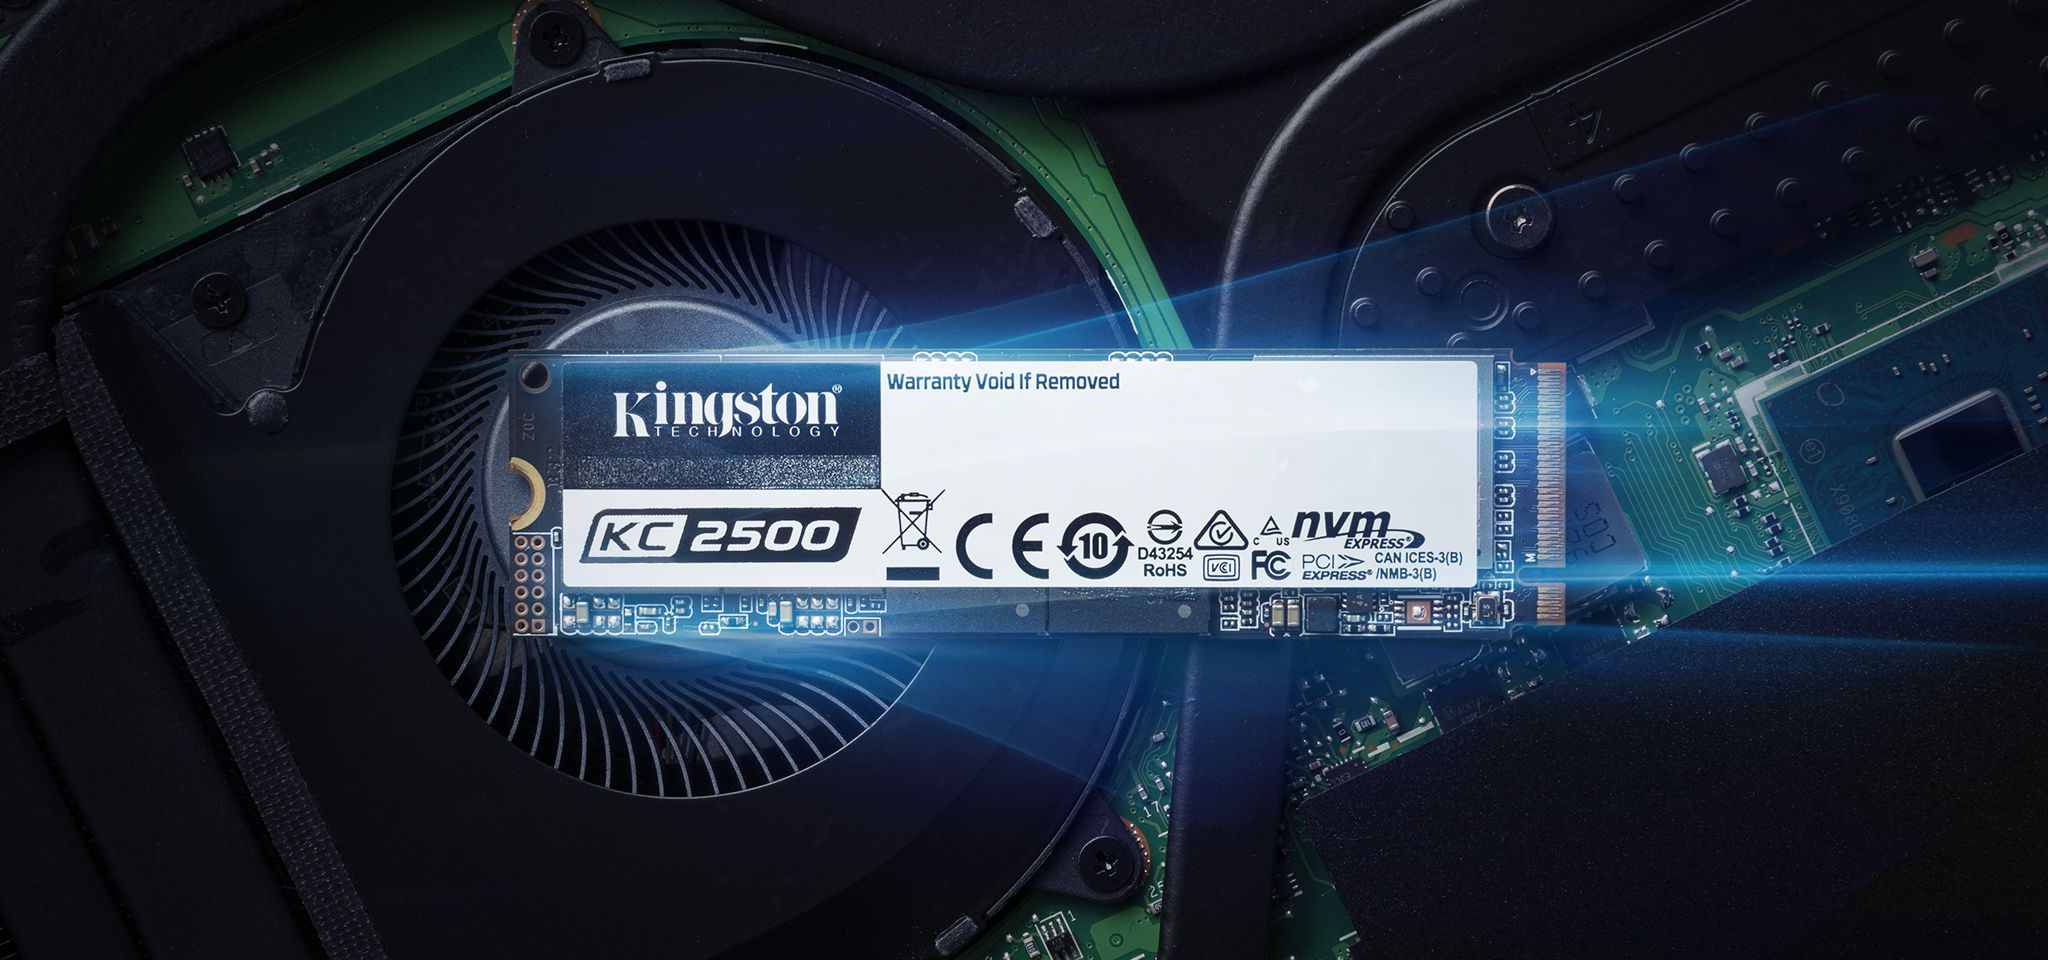 kc2500 image 02 Kingston เปิดตัวไดร์ฟ KC2500 NVMe PCIe SSD รุ่นใหม่ล่าสุดในไทย